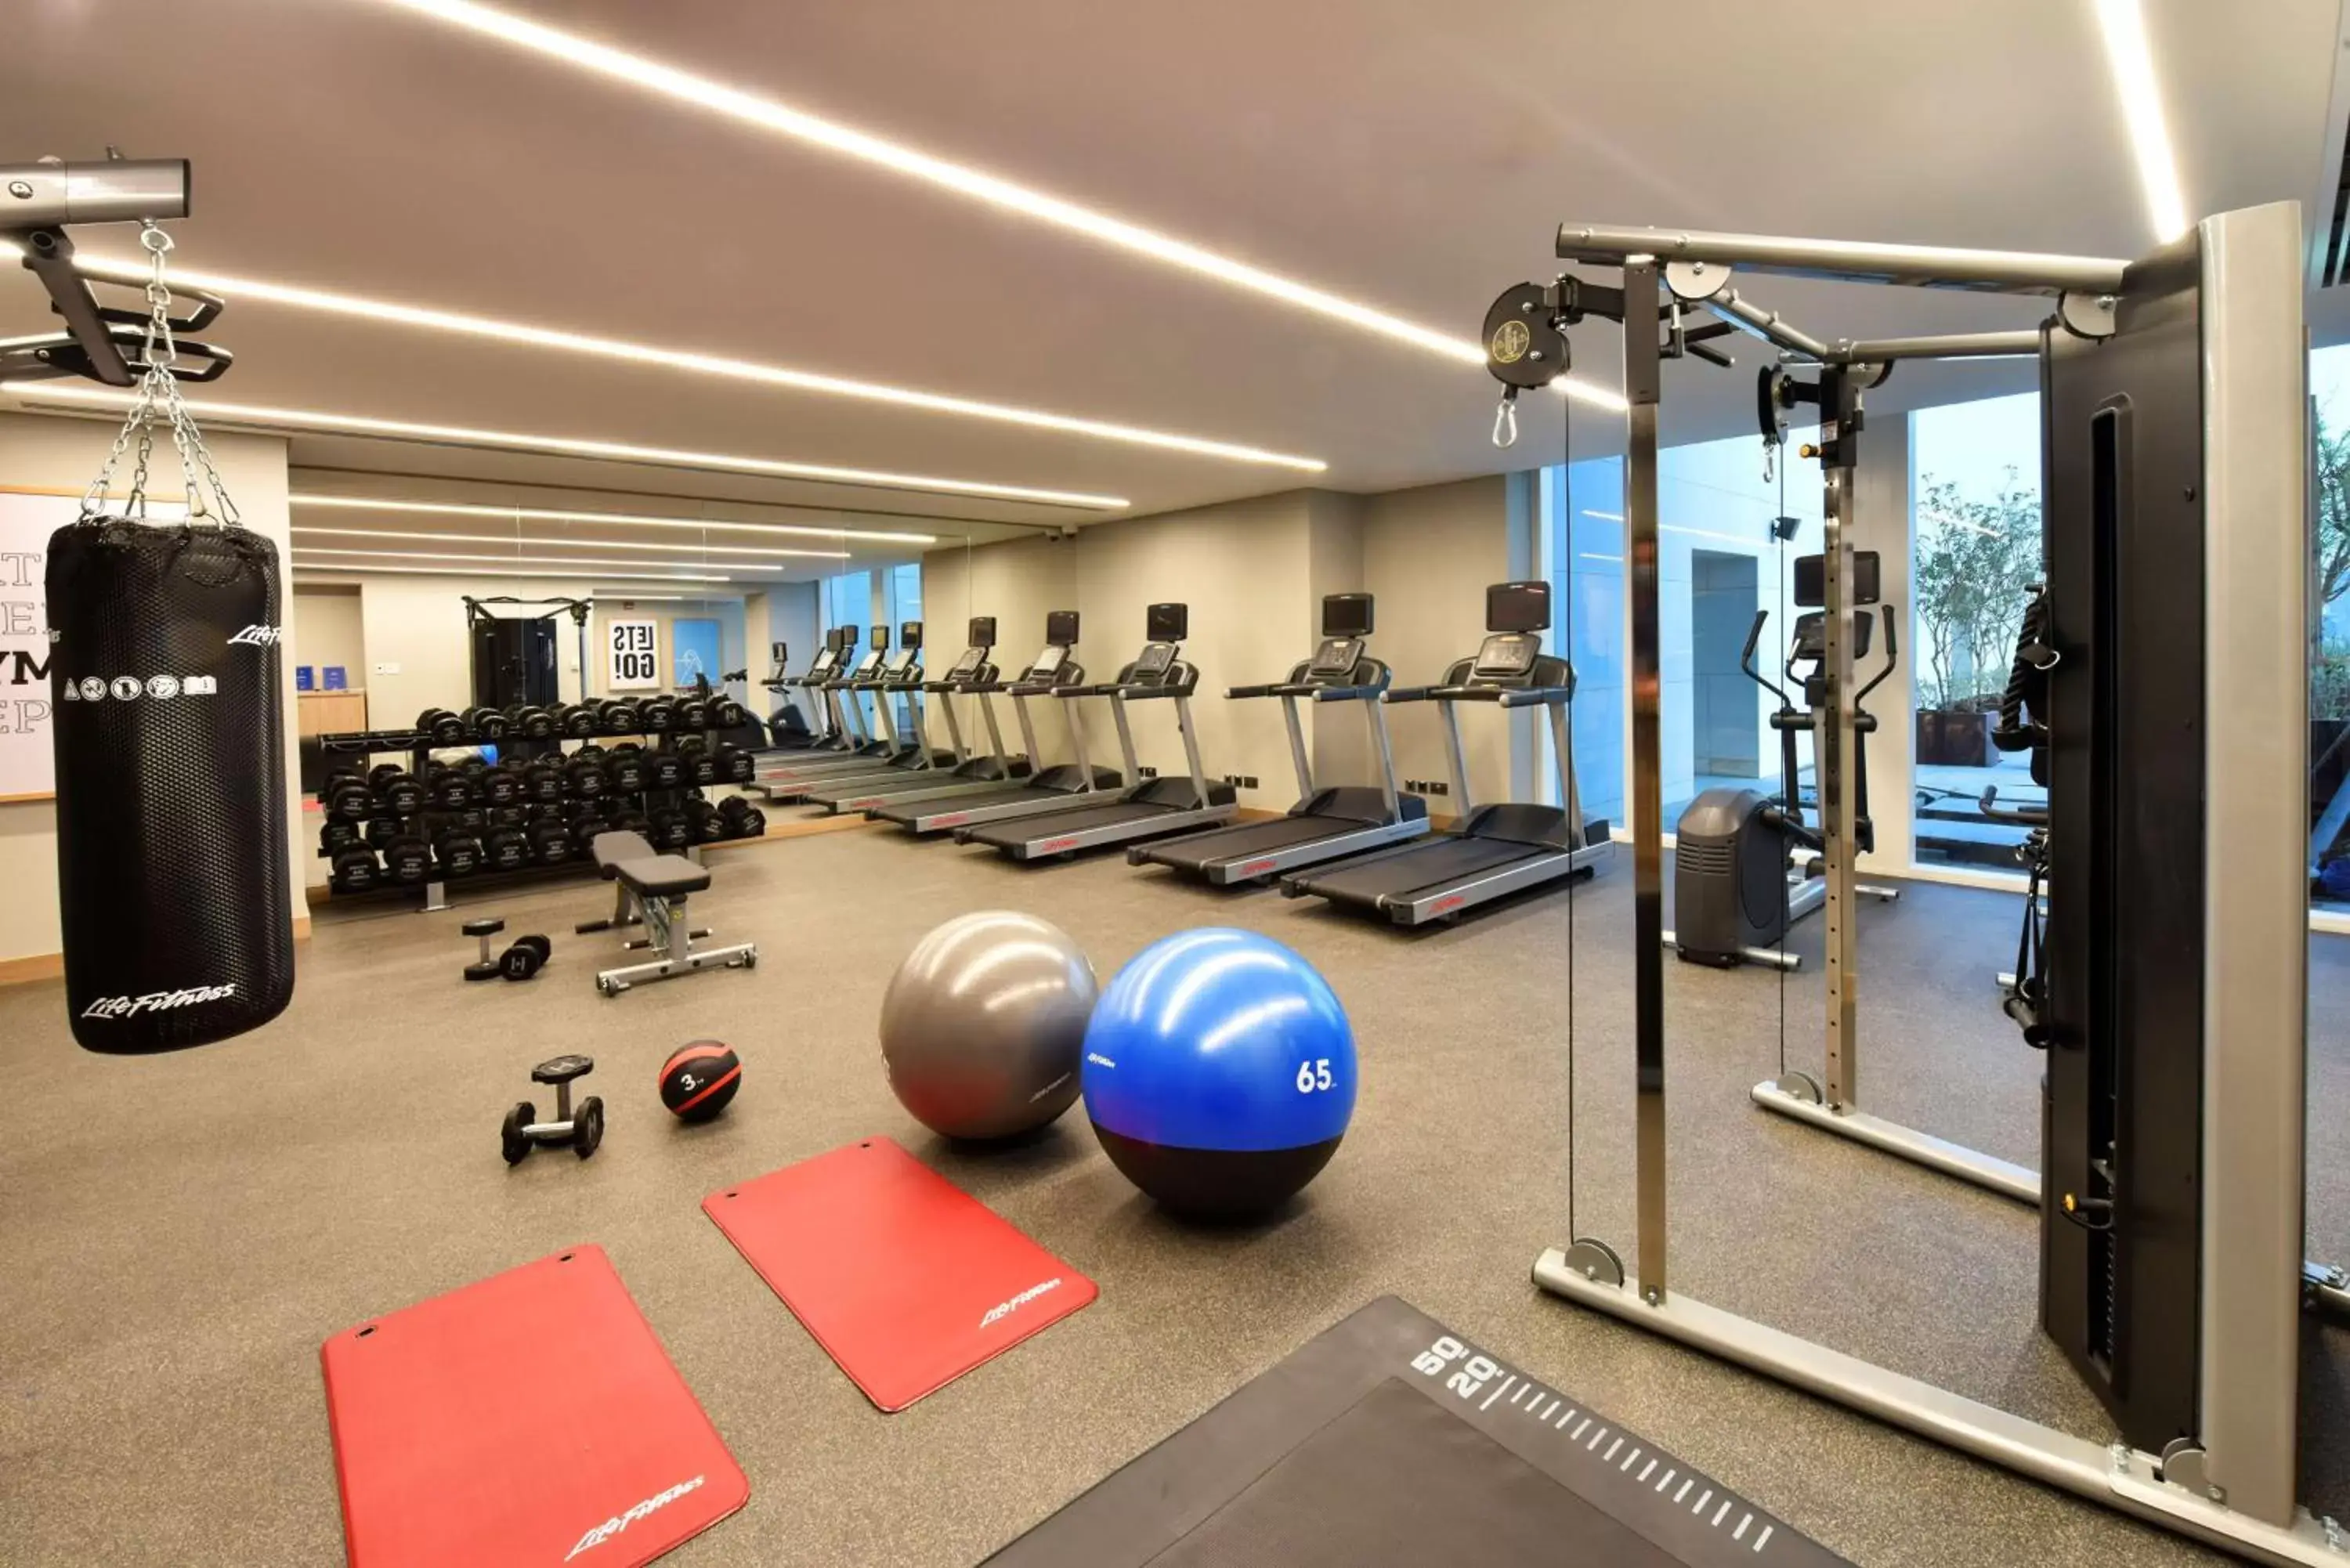 Fitness centre/facilities, Fitness Center/Facilities in Hilton Garden Inn Bahrain Bay